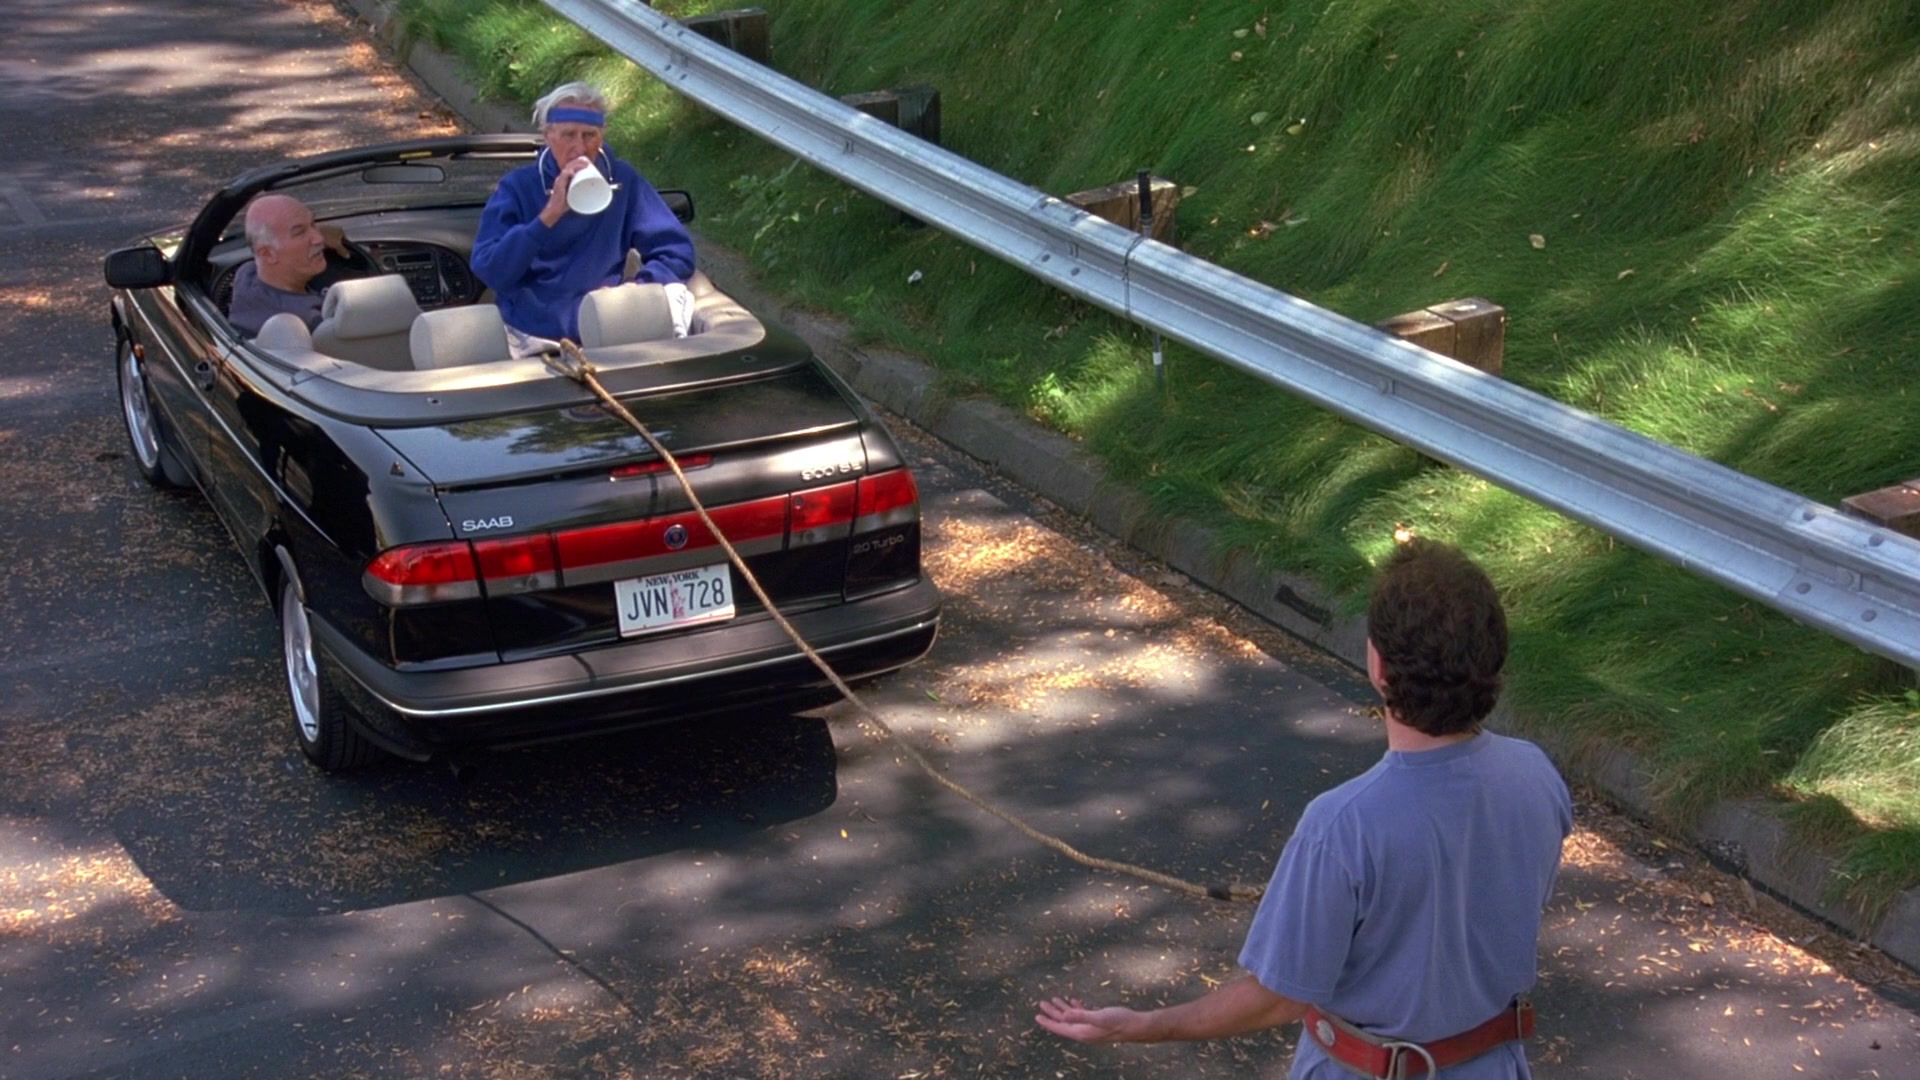 Saab Convertible Car In Seinfeld Season 9 Episode 4 The Blood (1997)